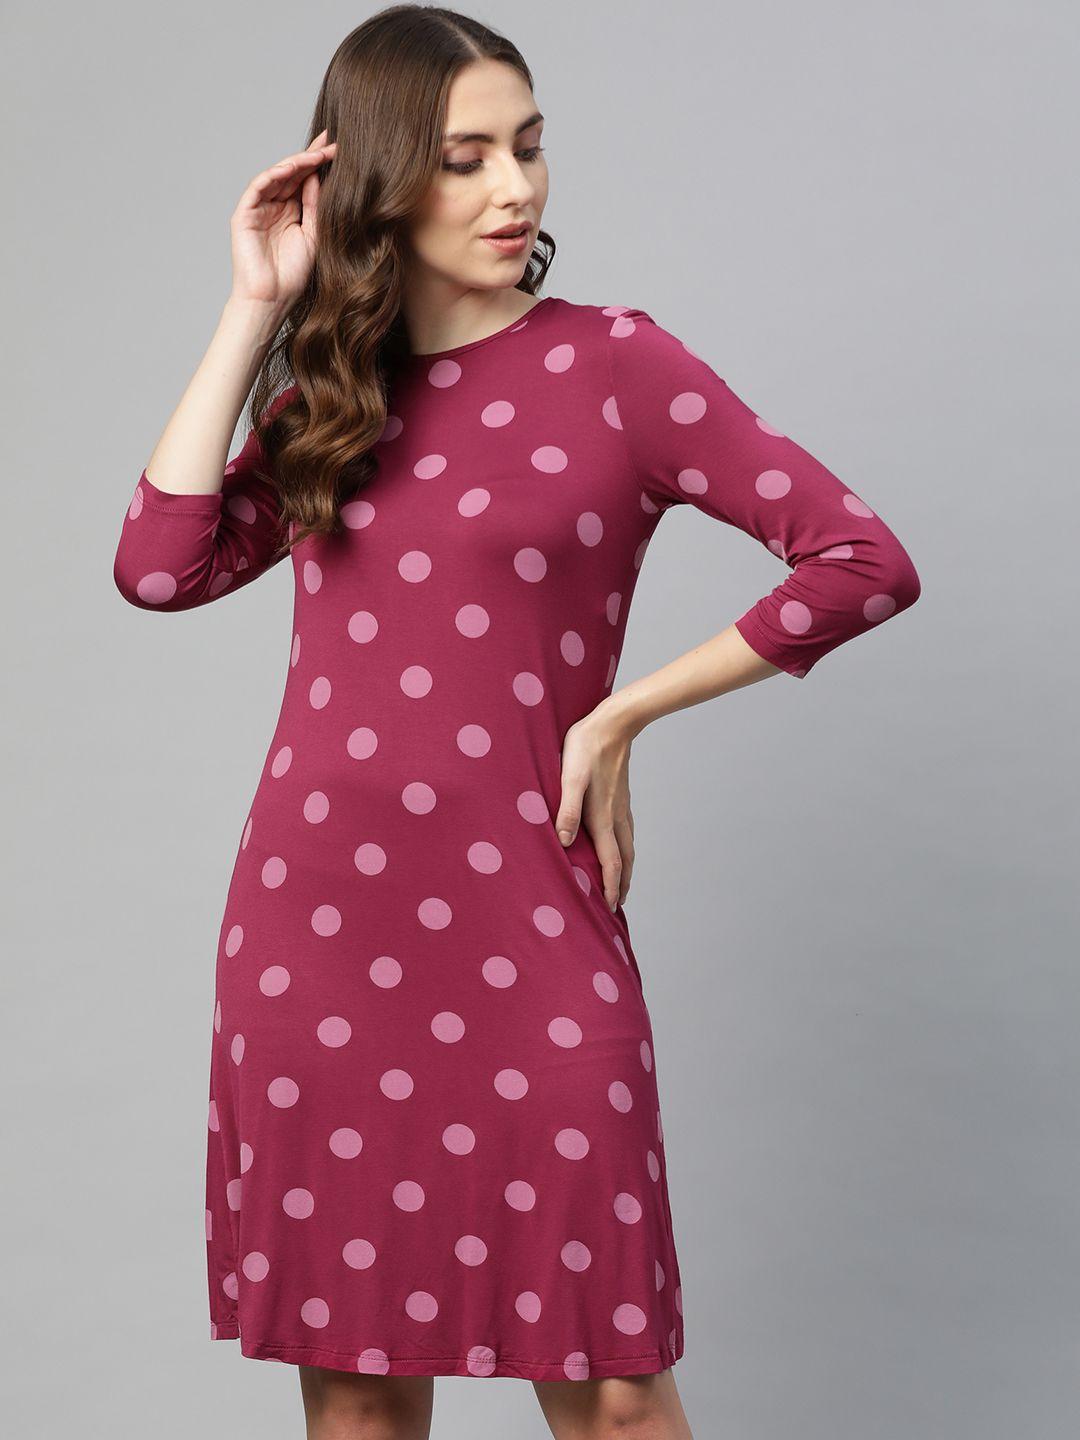 marks & spencer purple & pink polka dot print a-line dress